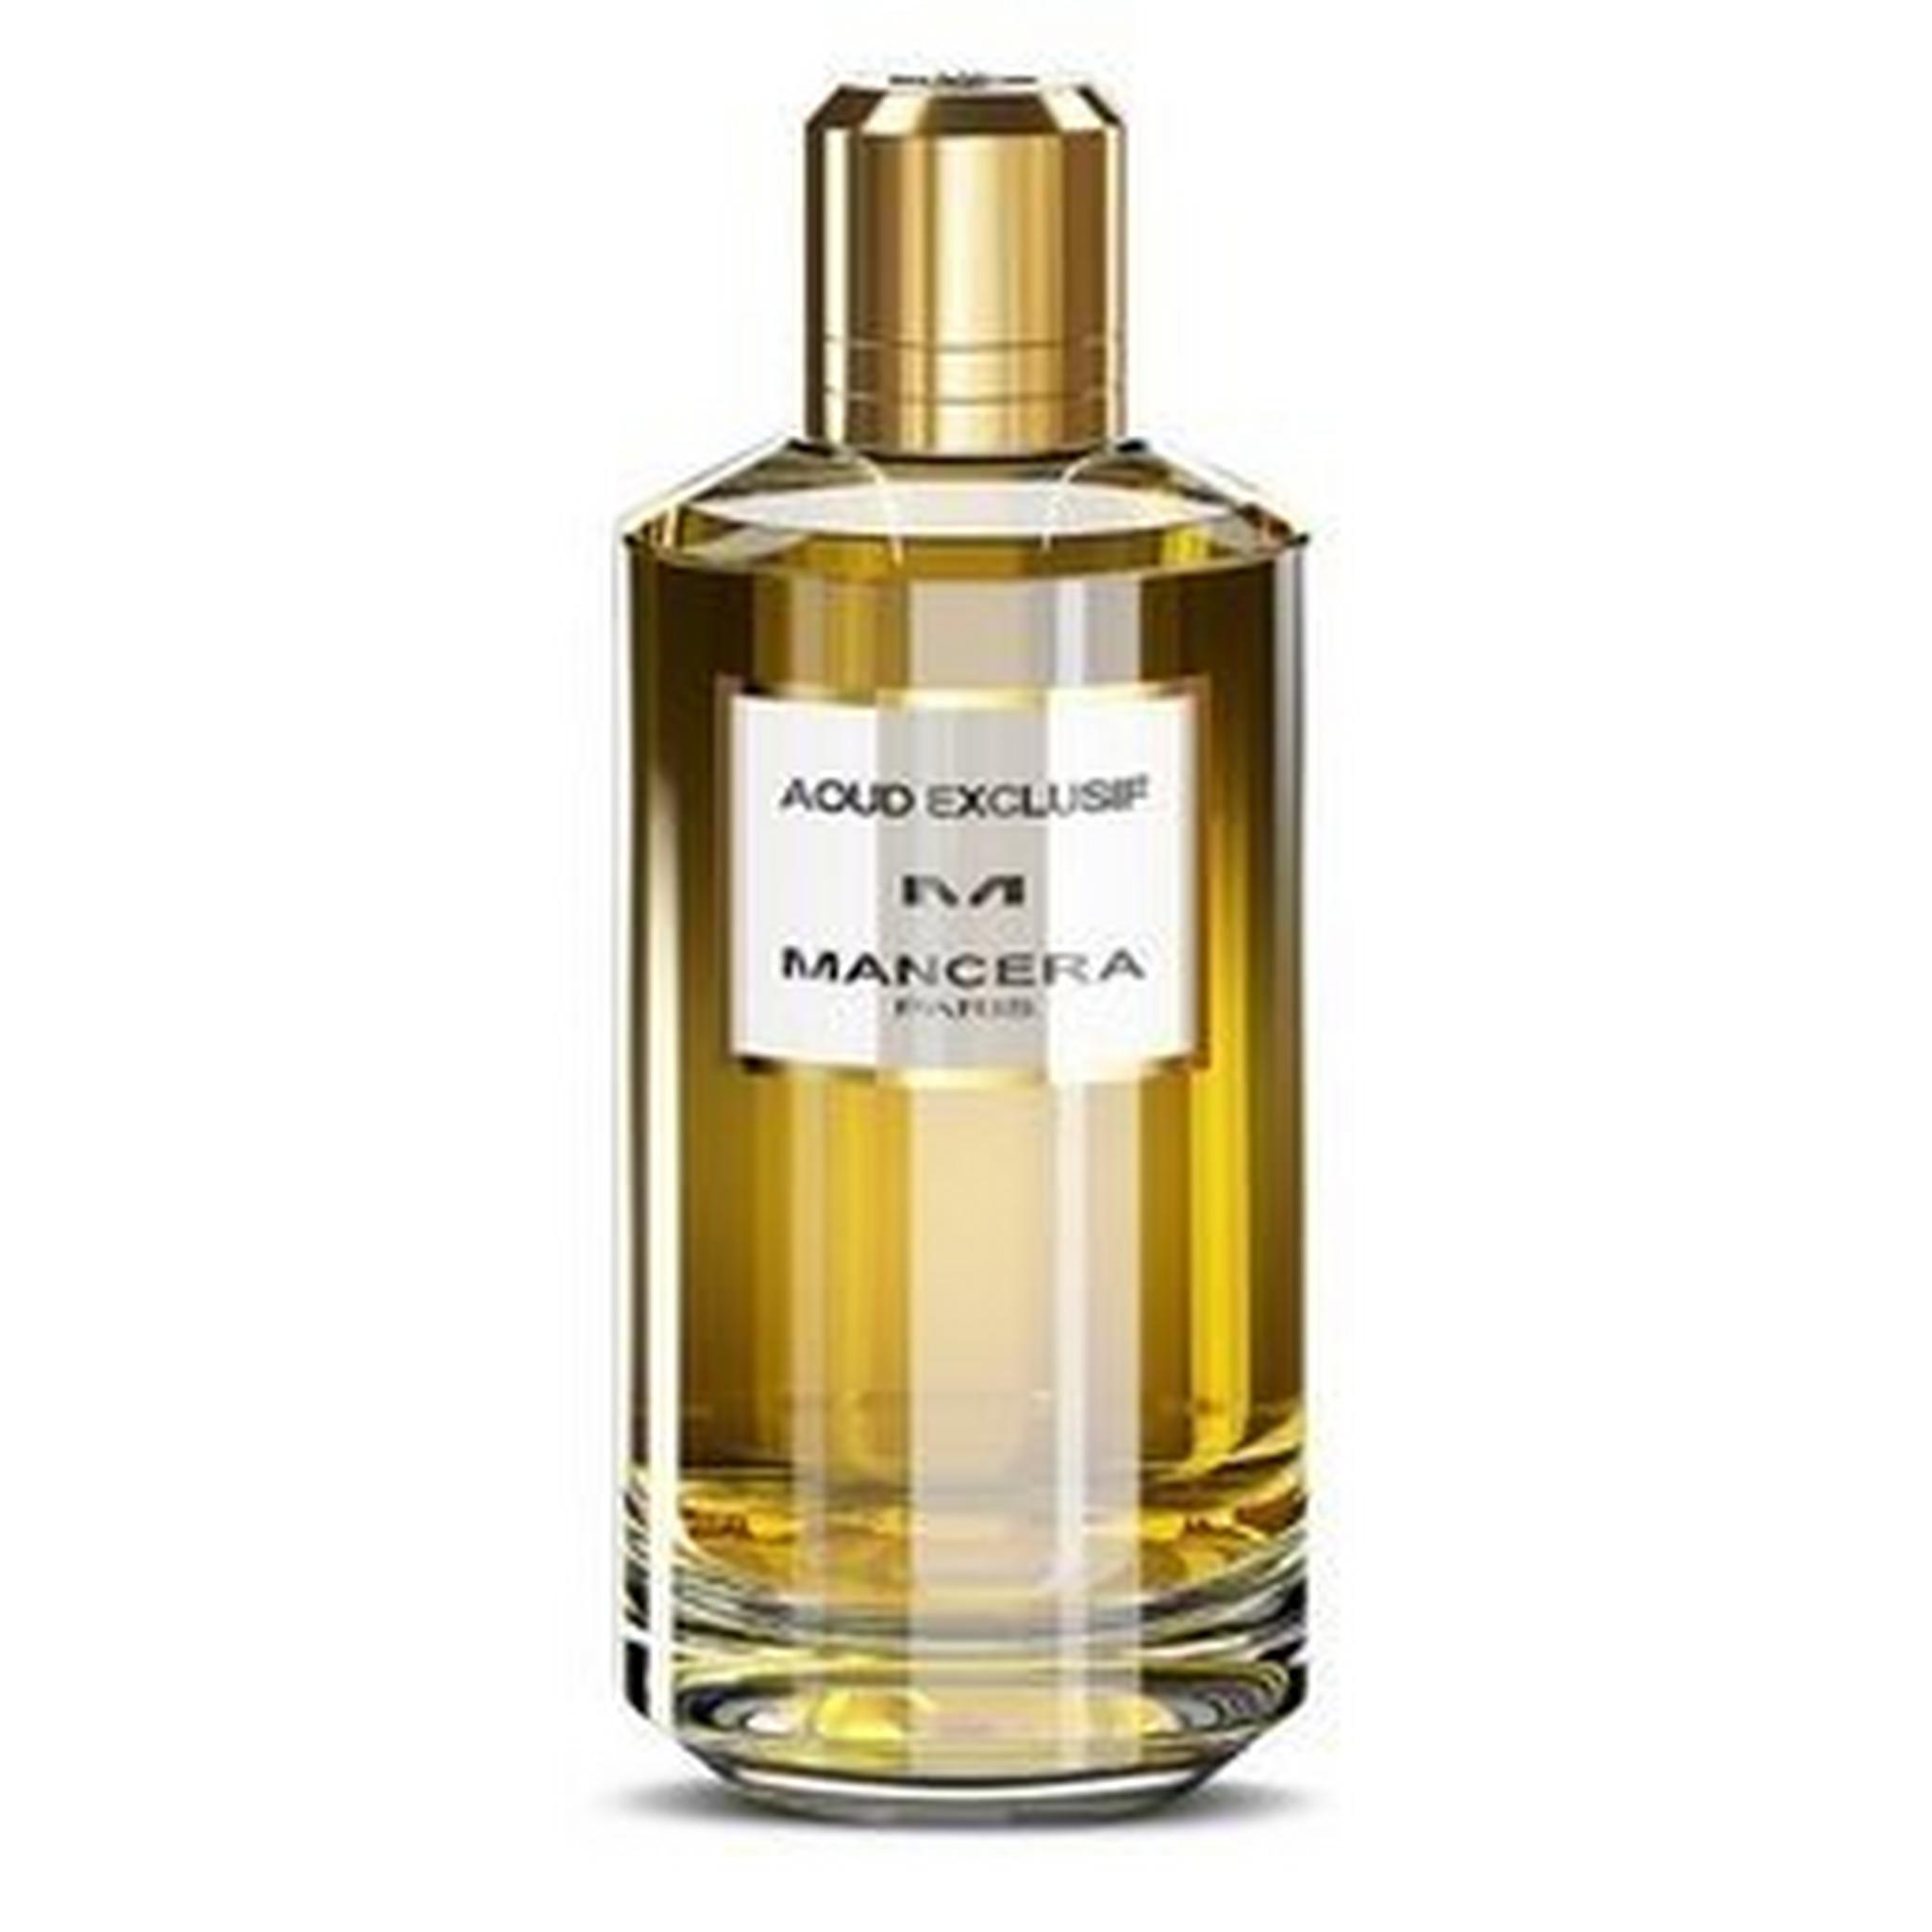 MANCERA Aoud Exclusif – Eau De Parfum 120 ml